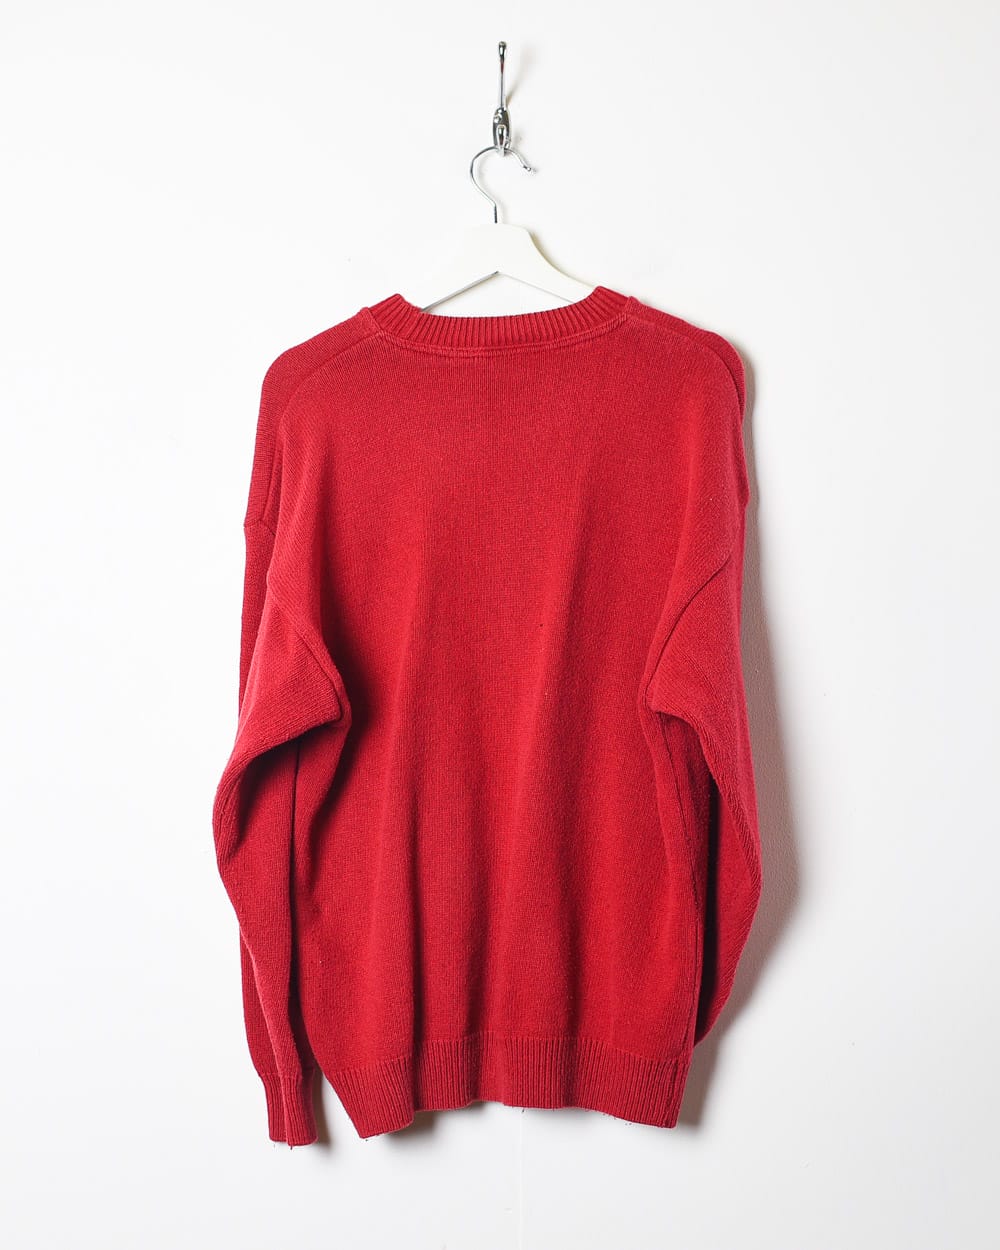 Red Sweater Shop Cambridge York Windosr Knitted Sweatshirt - Medium